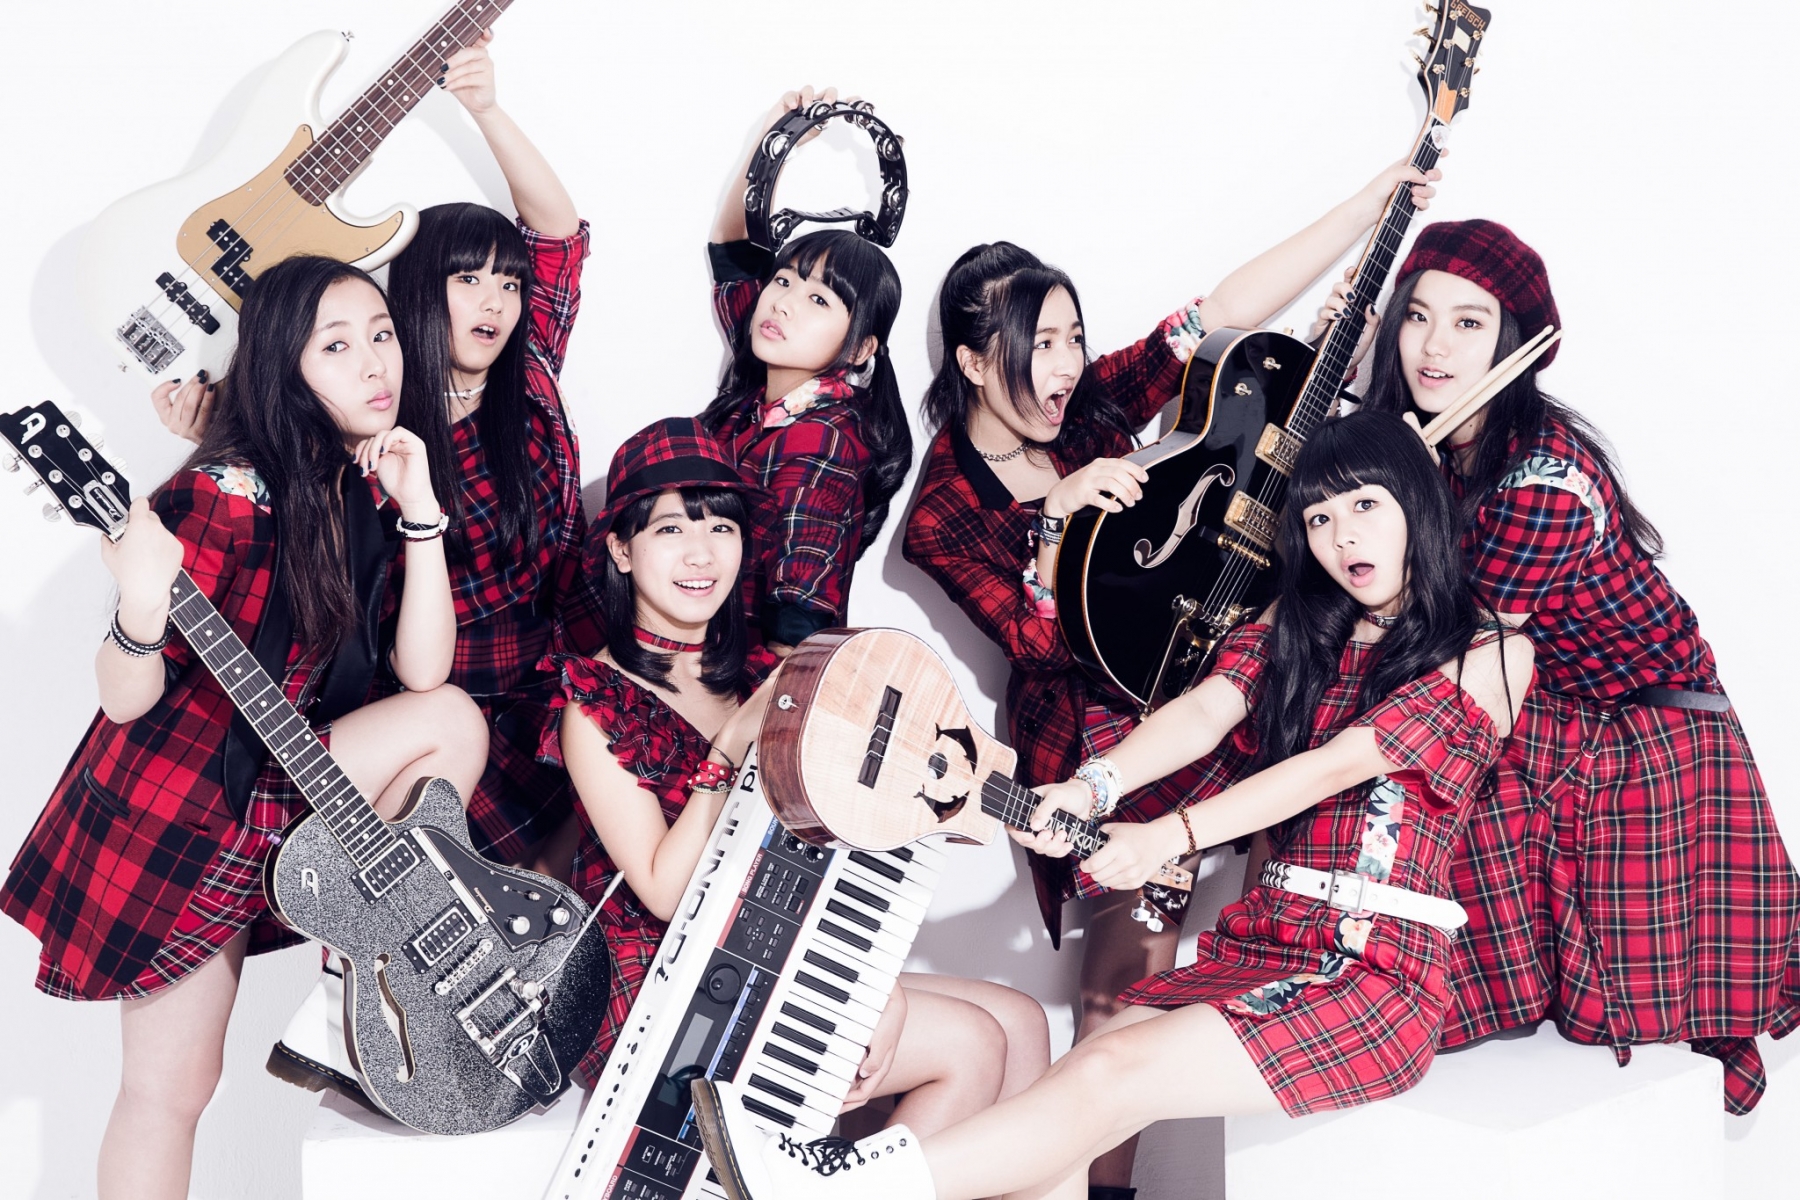 Японскую жену группа. Герлз бэнд. Girl Band группа. Parfait группа японская. Японские музыкальные группы девушек.